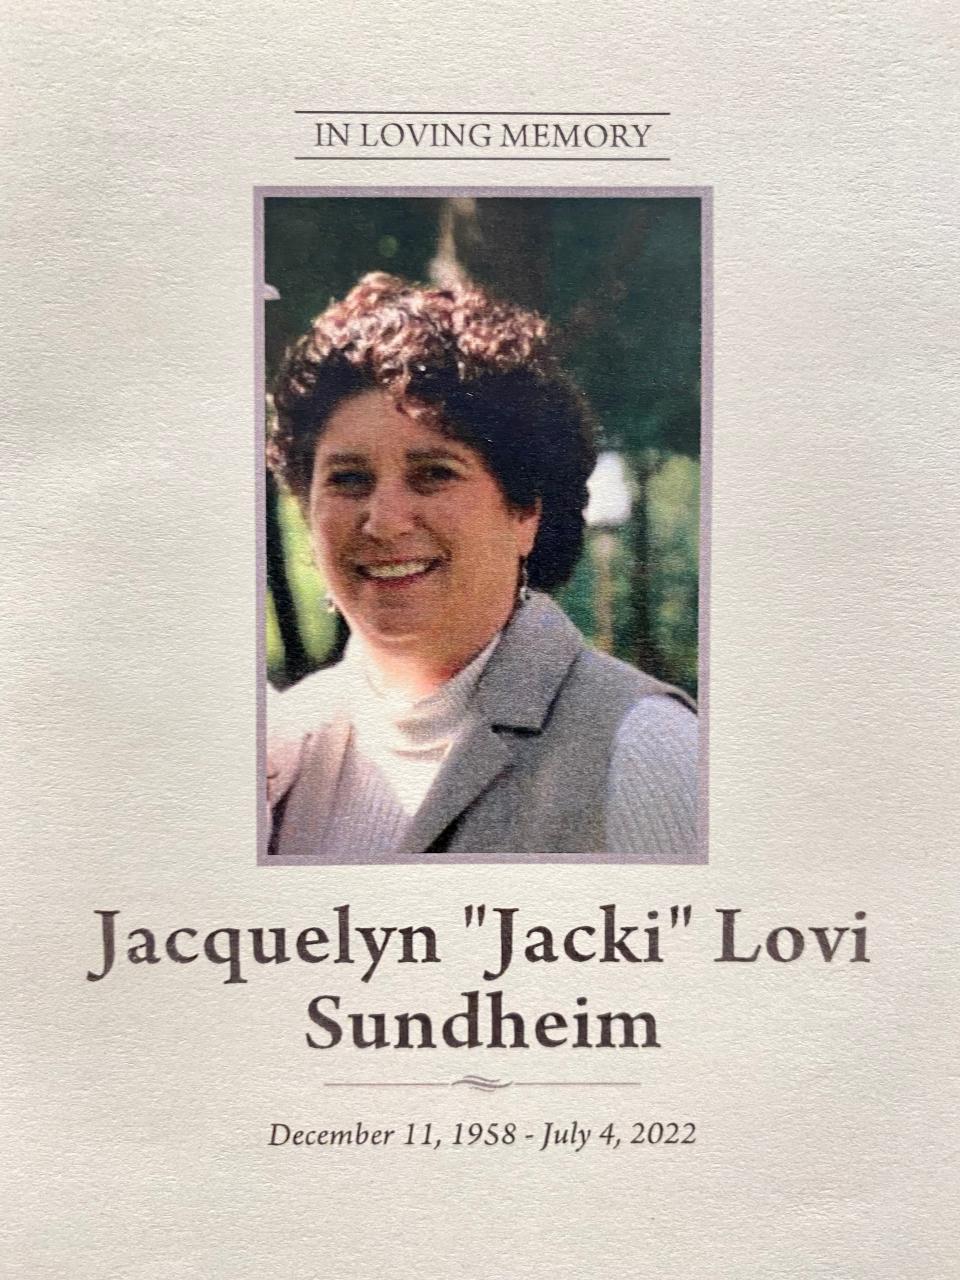 A program for Jacquelyn “Jacki” Lovi Sundheim at North Shore Congregation Israel in Glencoe, Illinois, on July 8, 2022.